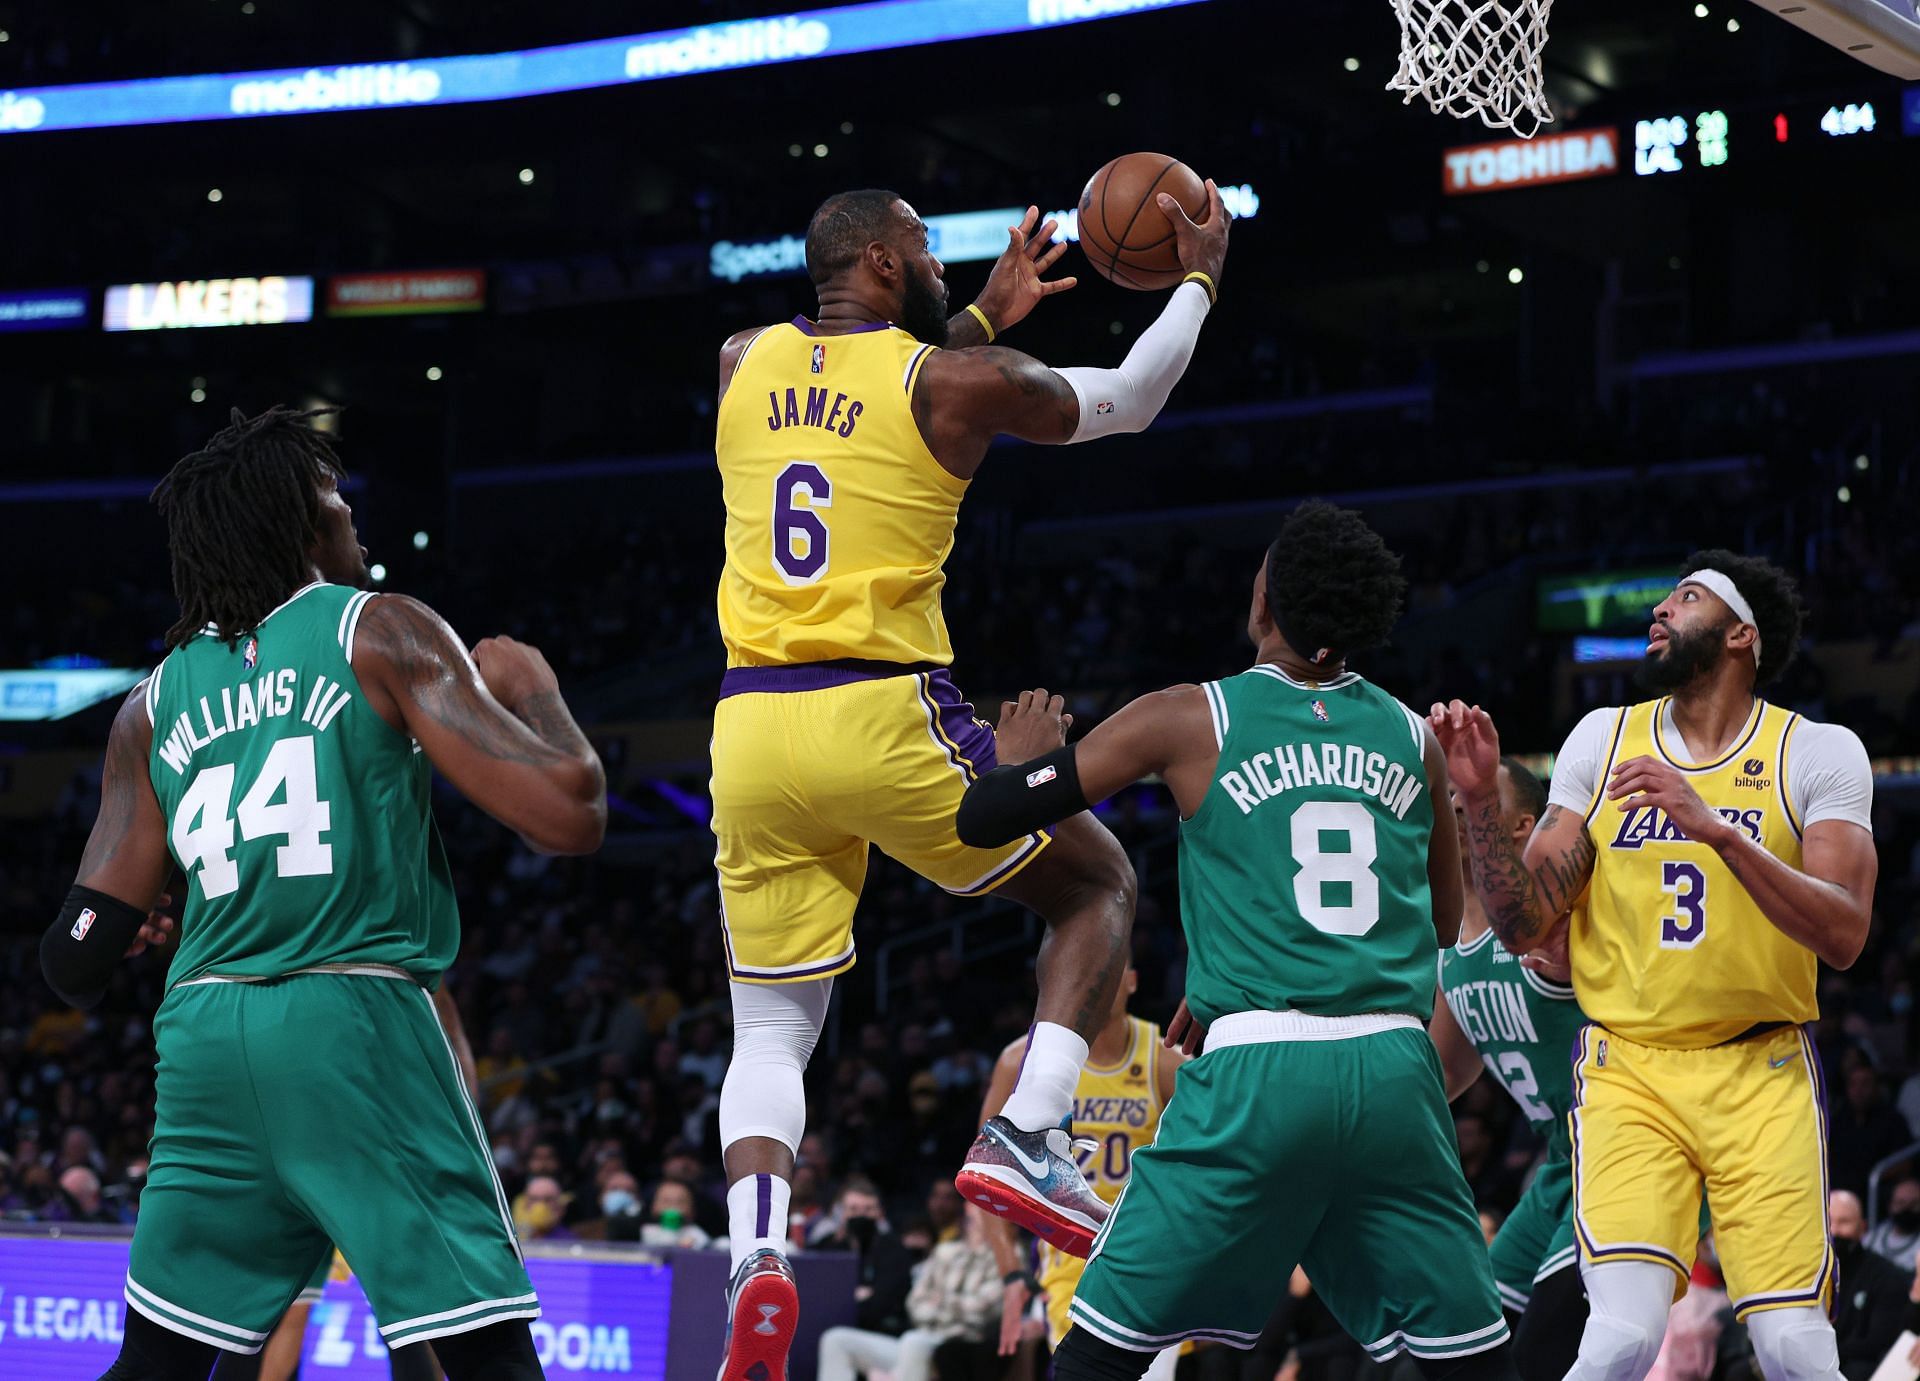 LeBron James drives to the basket against the Boston Celtics